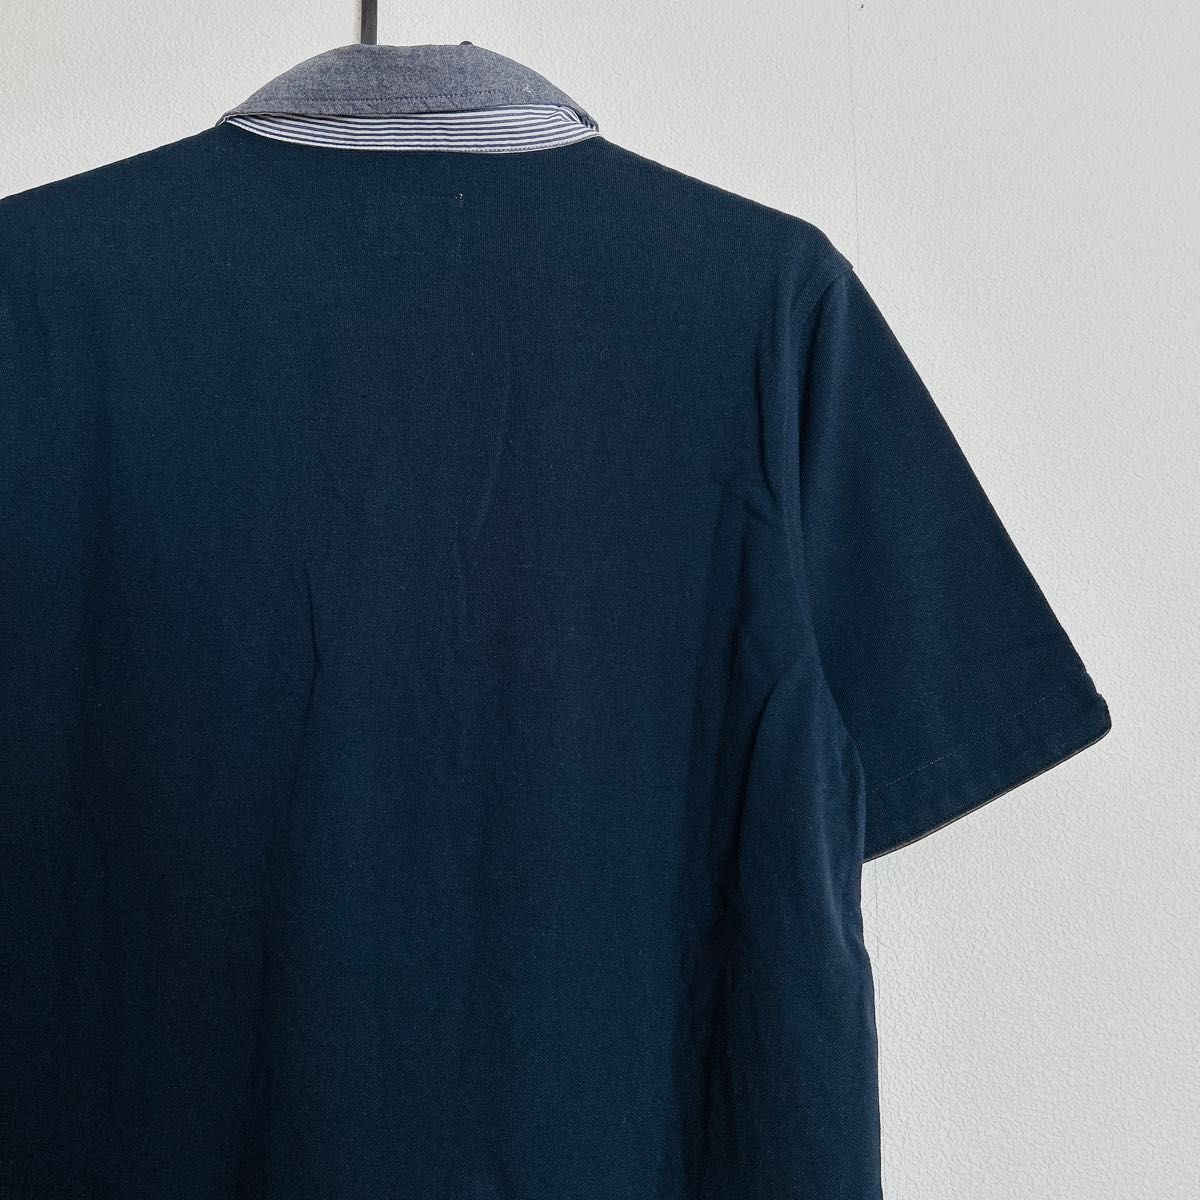 pm516.7 TK MIXPICE サイズXL タケオキクチ ネイビー 半袖ポロシャツ 紺色 メンズ トップス スキッパー 夏服